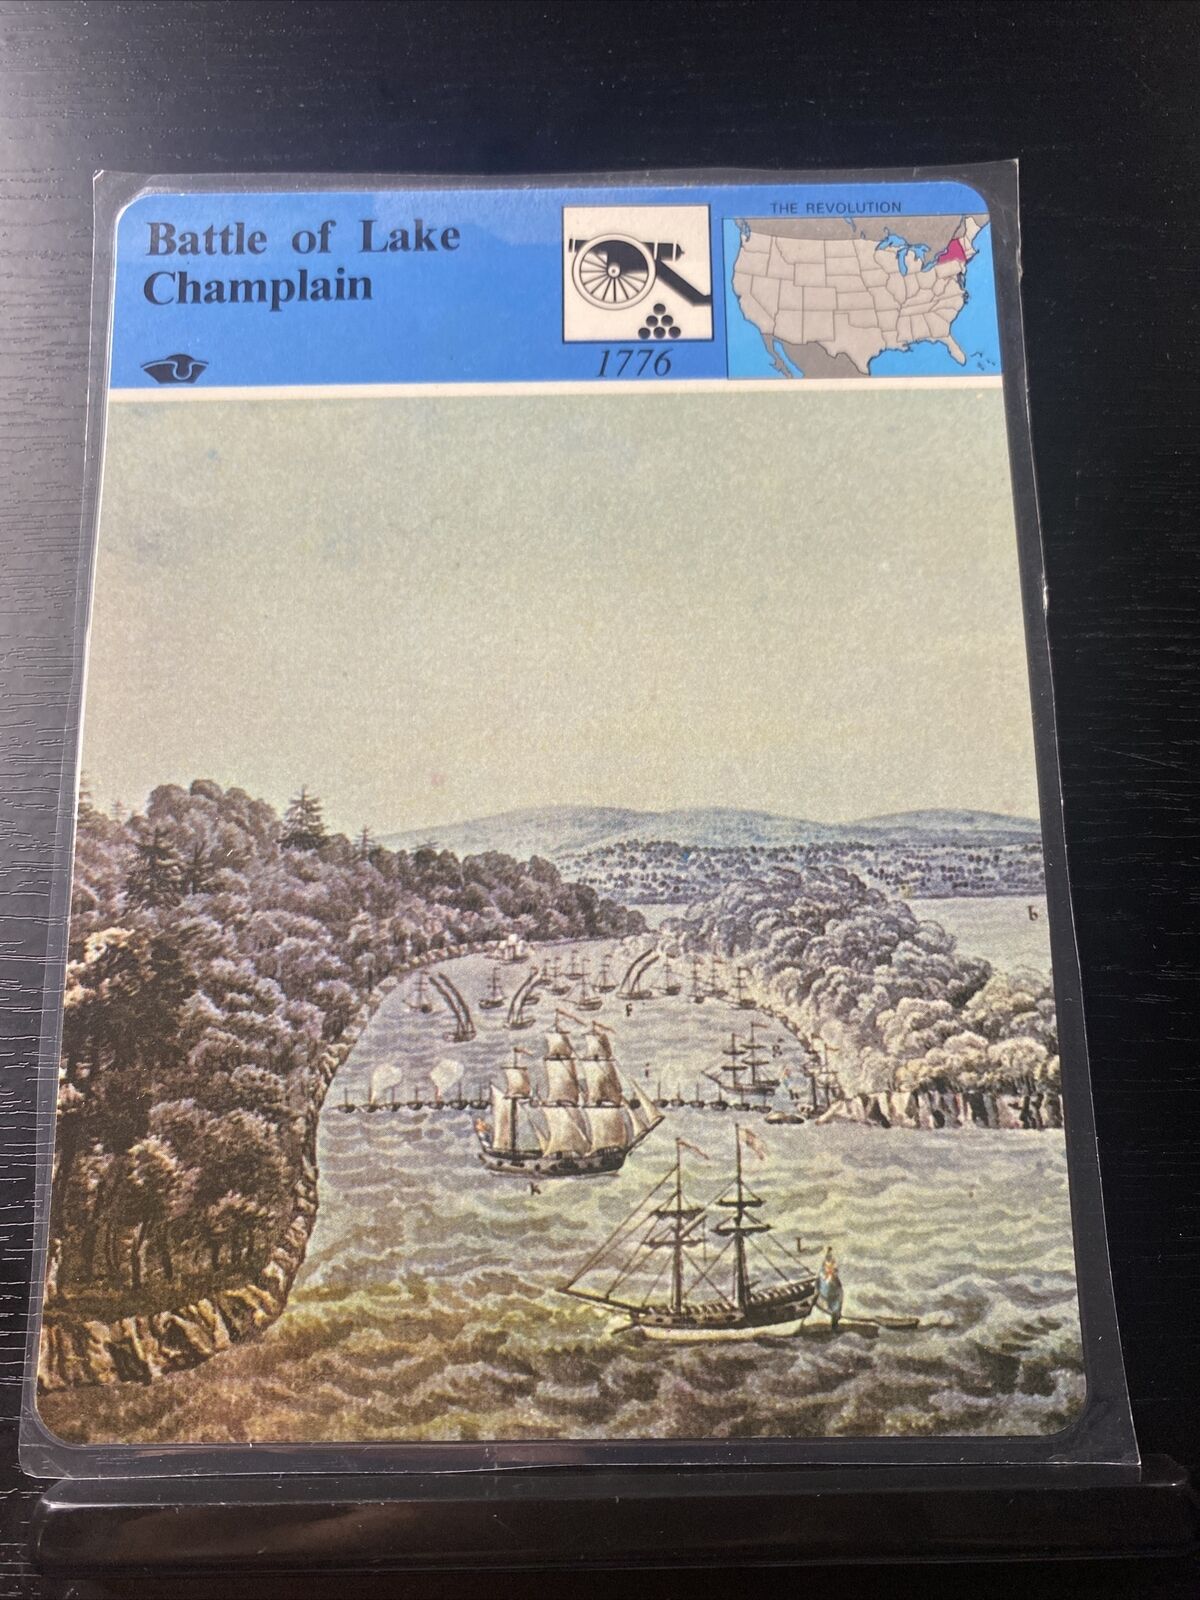 1979 panarizon battle of lake champlain learning card laminated